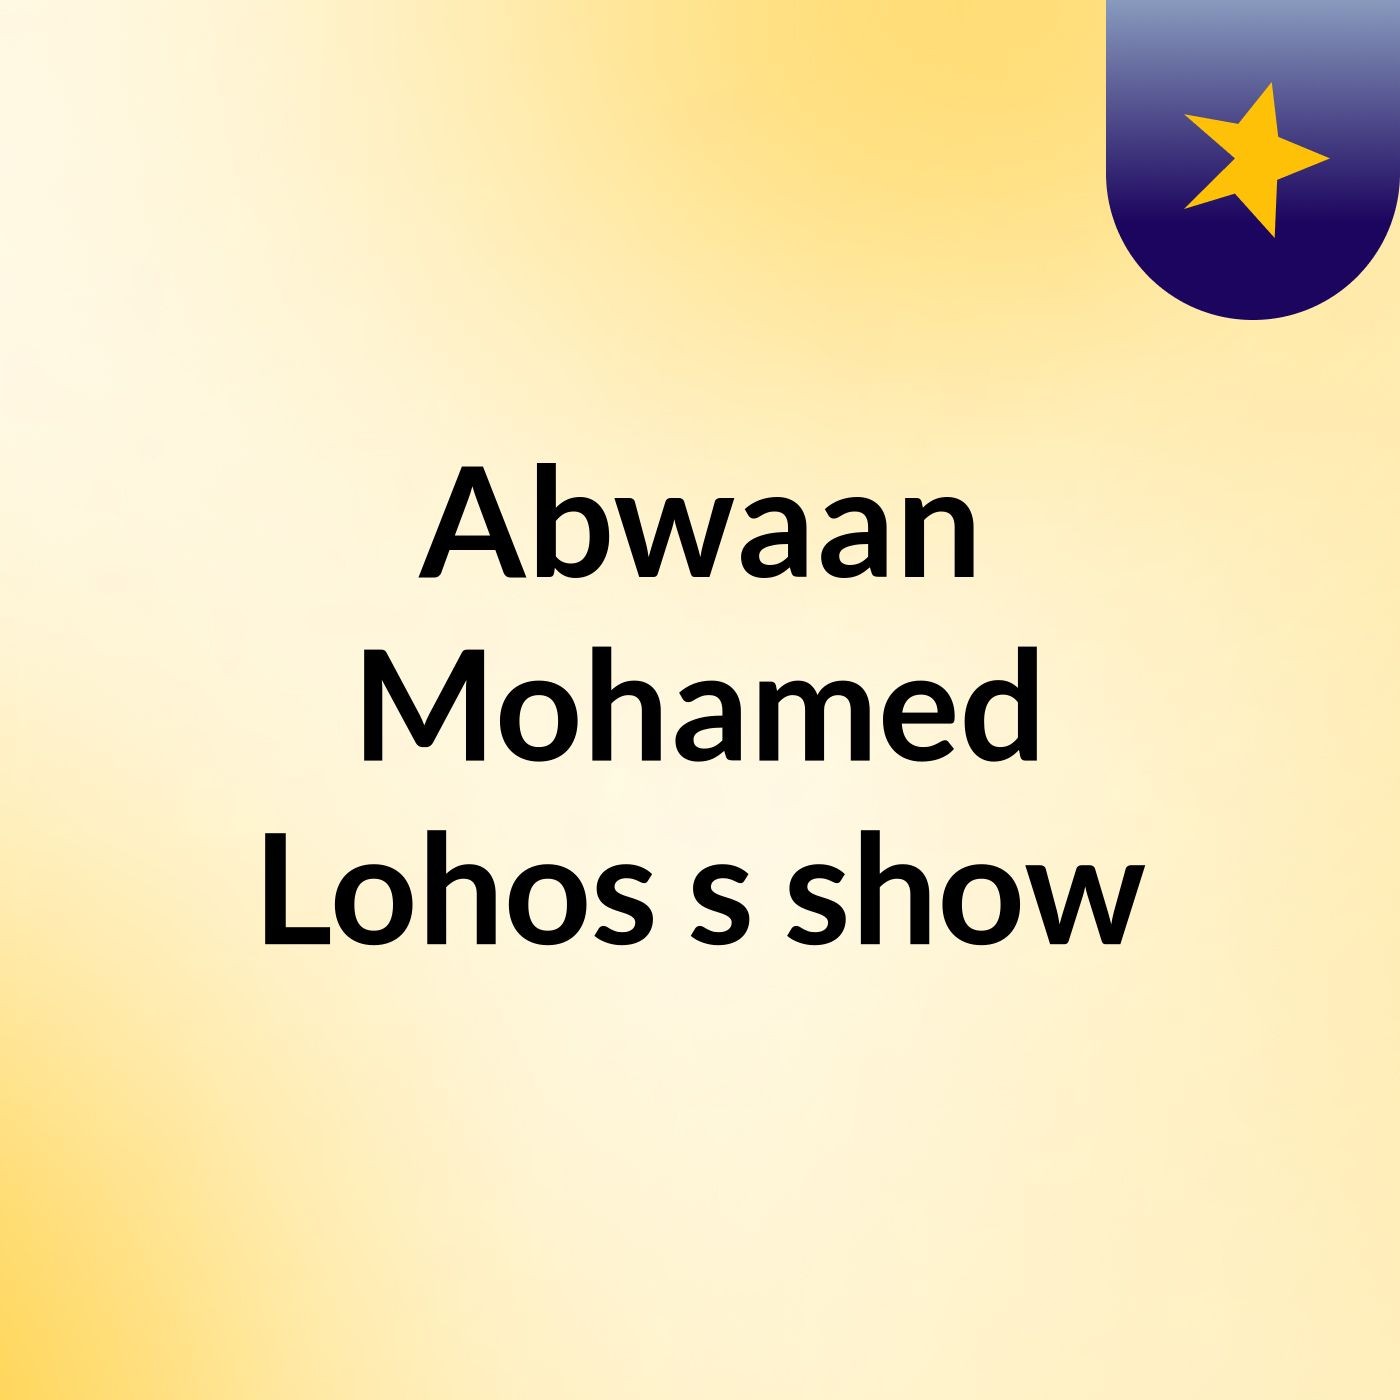 Abwaan Mohamed Lohos's show